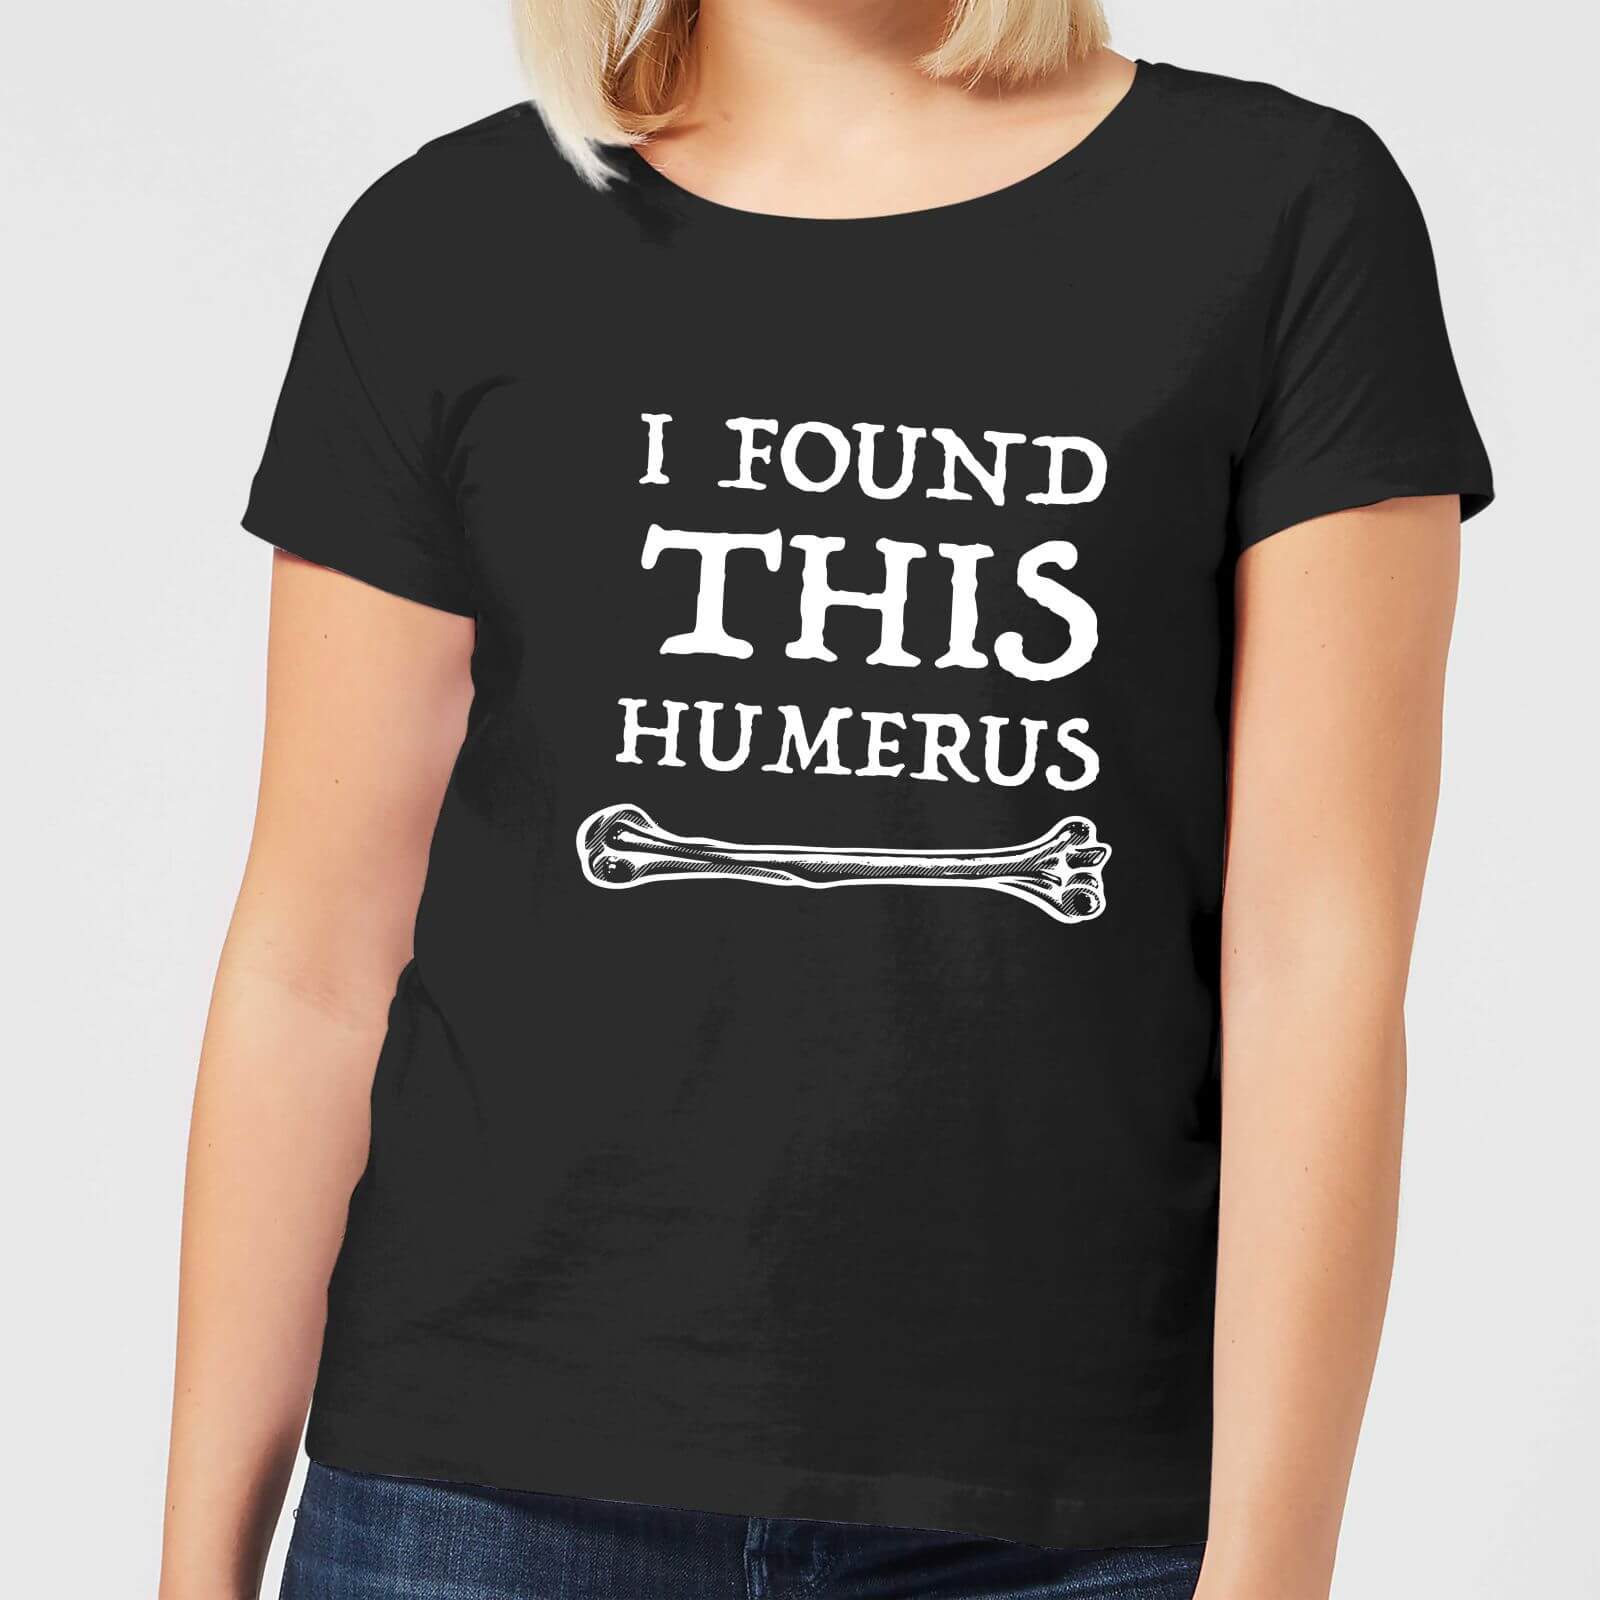 I Found This Humerus Women's T-shirt - Black - 3XL - Black